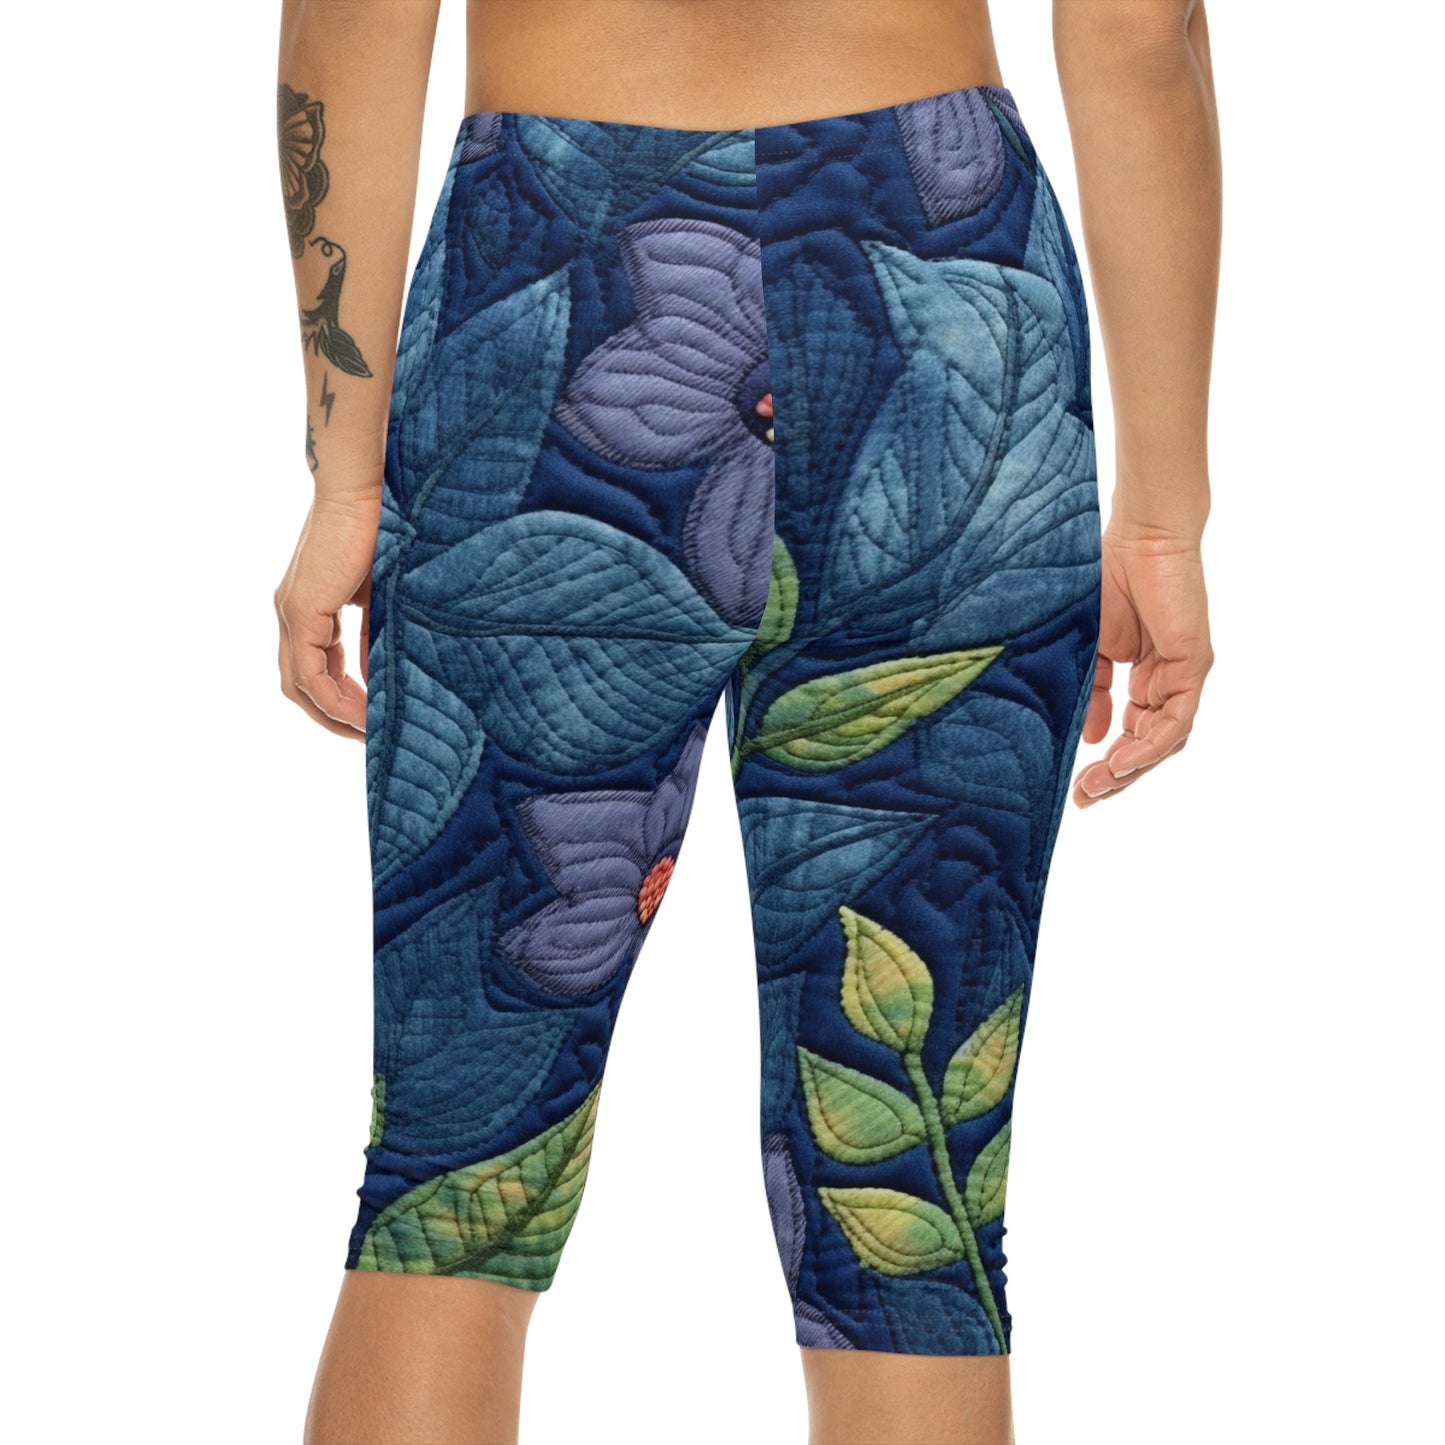 Floral Embroidery Blue: Denim-Inspired, Artisan-Crafted Flower Design - Women’s Capri Leggings (AOP)